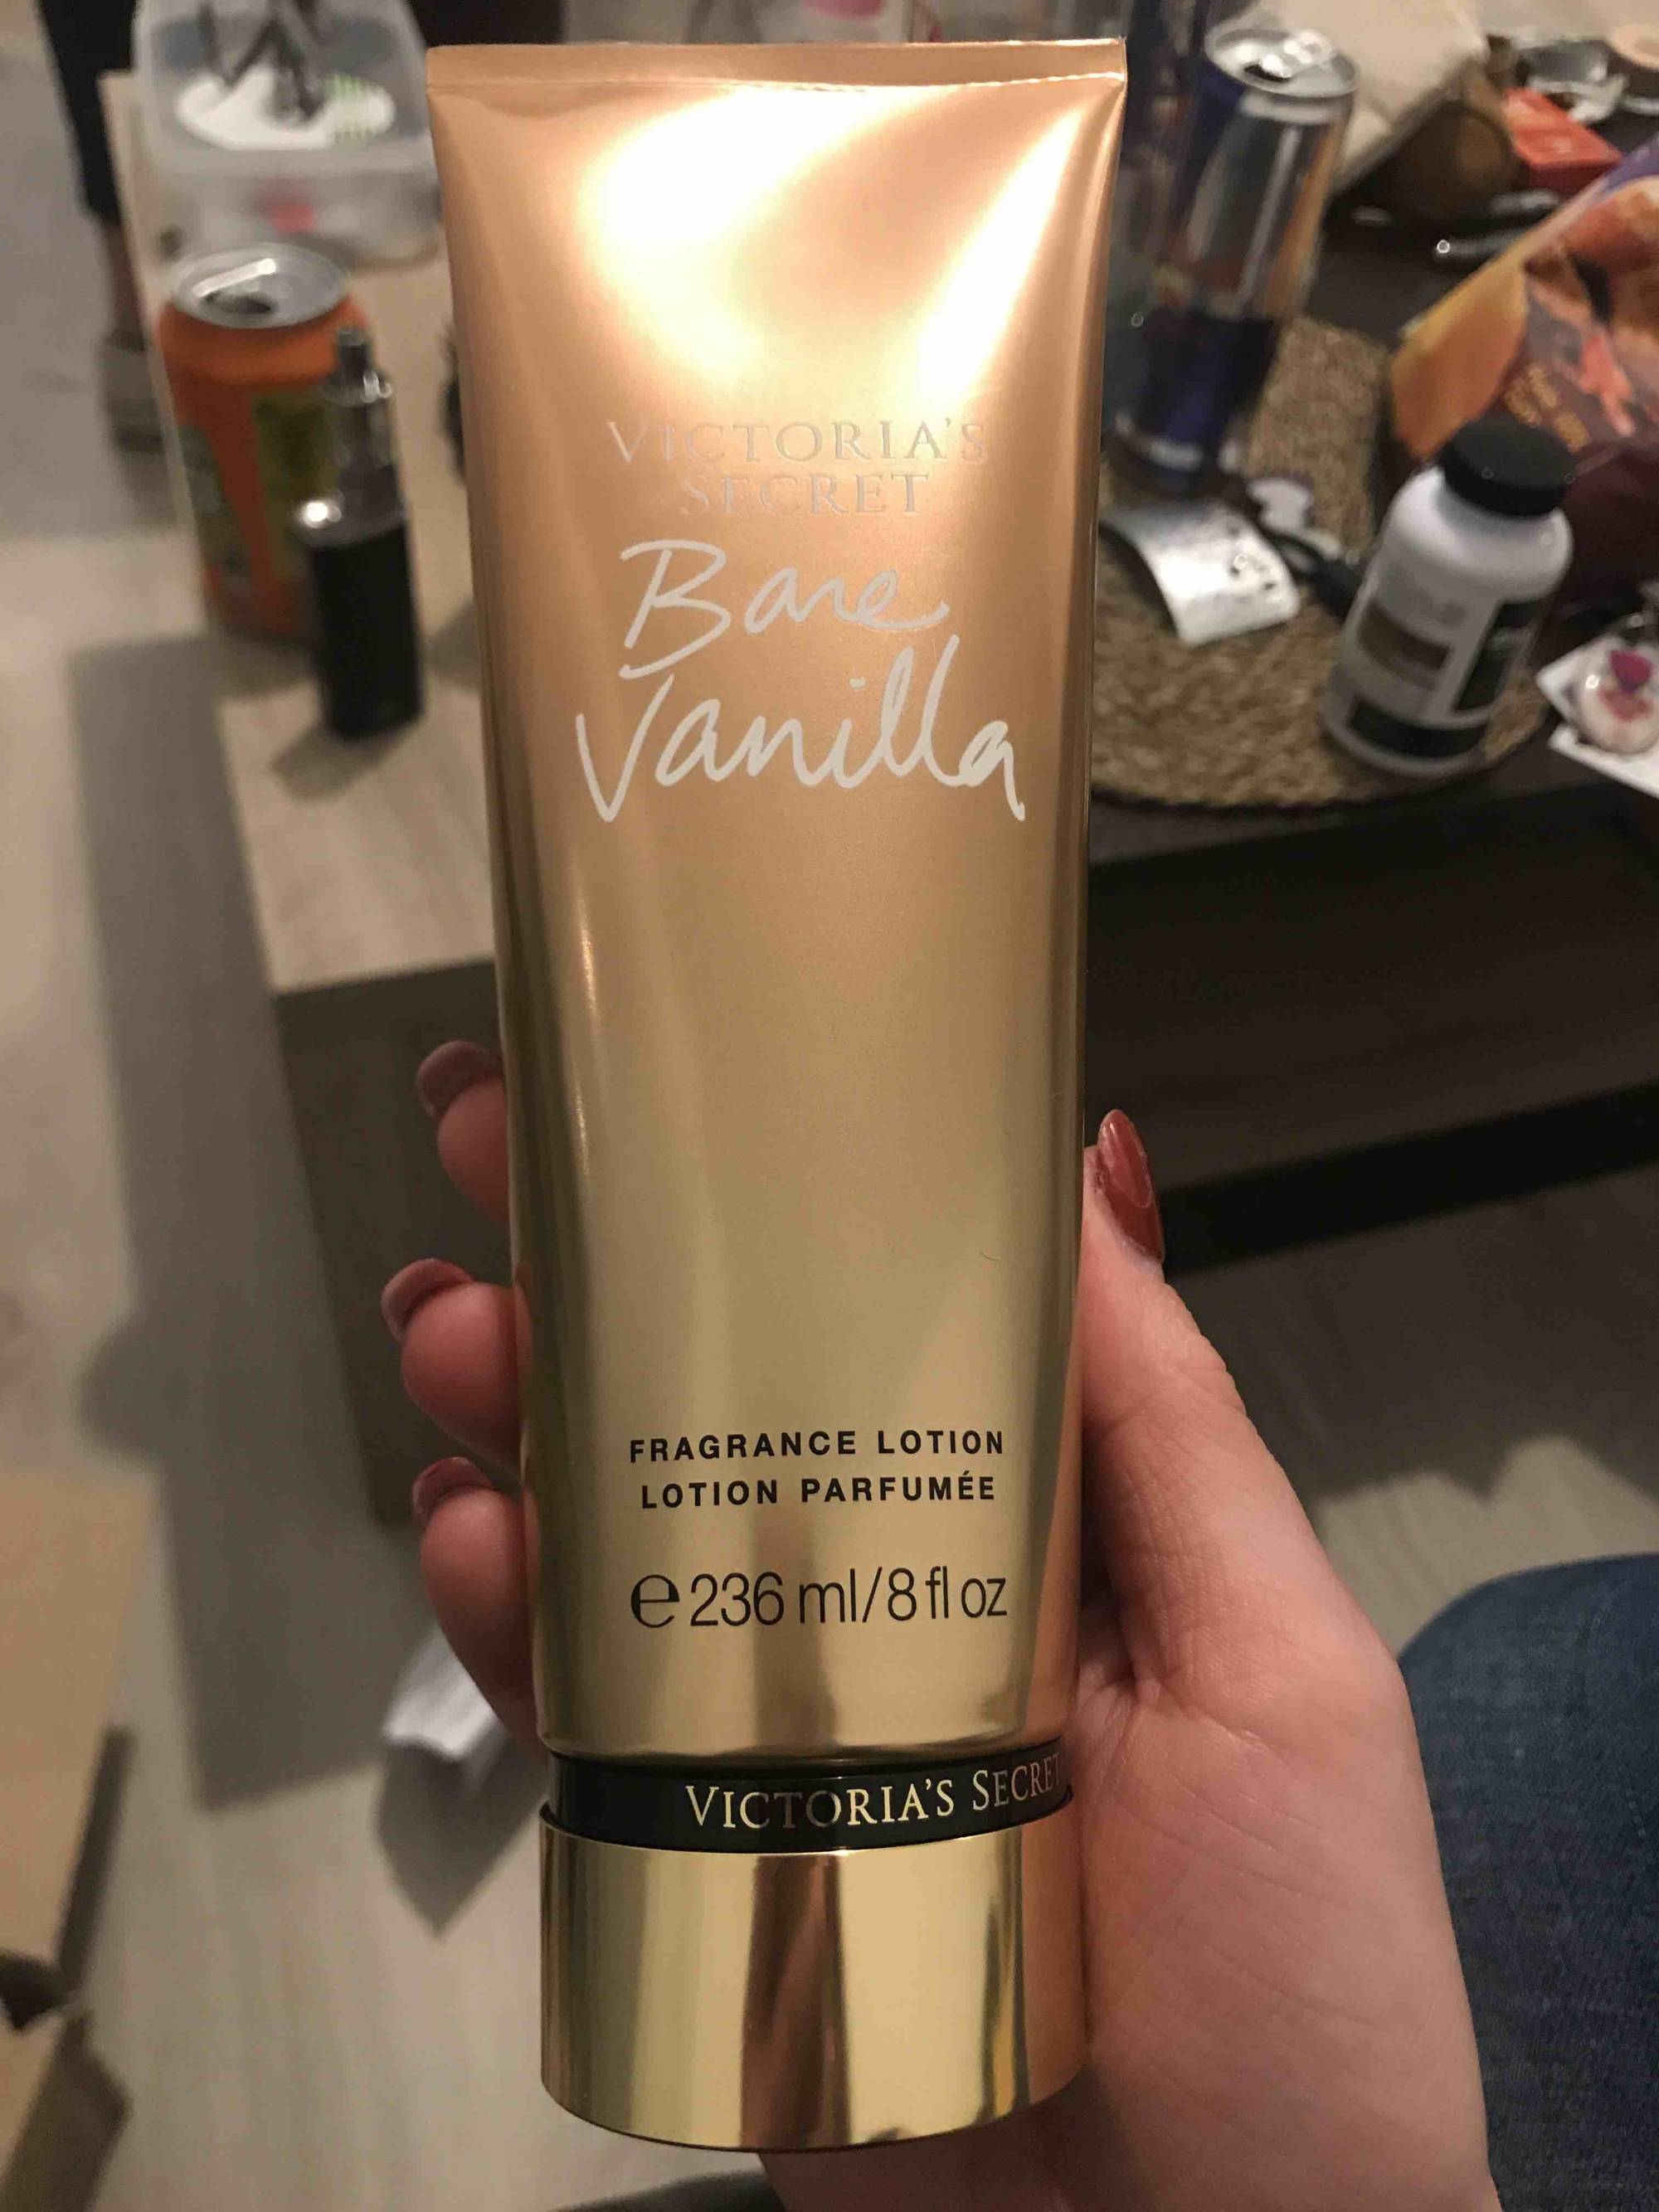 VICTORIA'S SECRET - Bare vanilla - Lotion parfumée